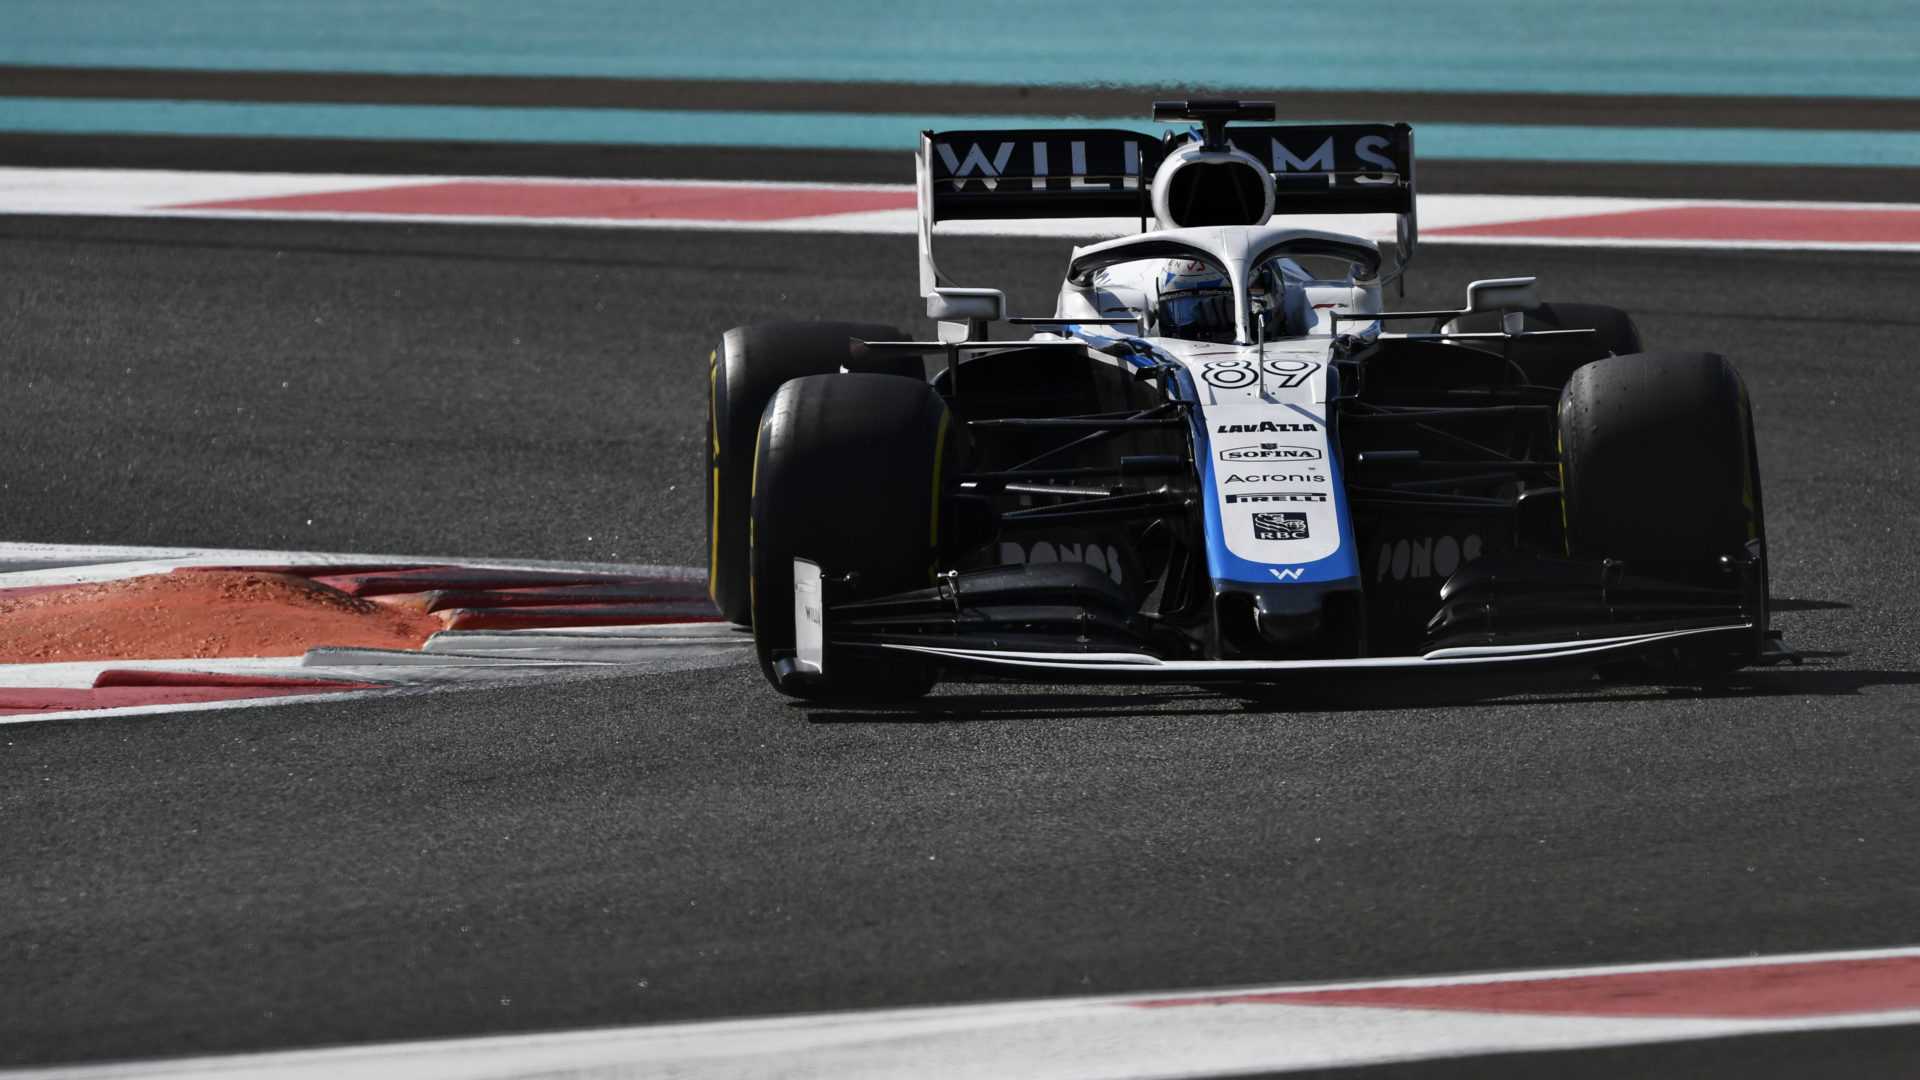 Essais Williams lors du Grand Prix d'Abu Dhabi